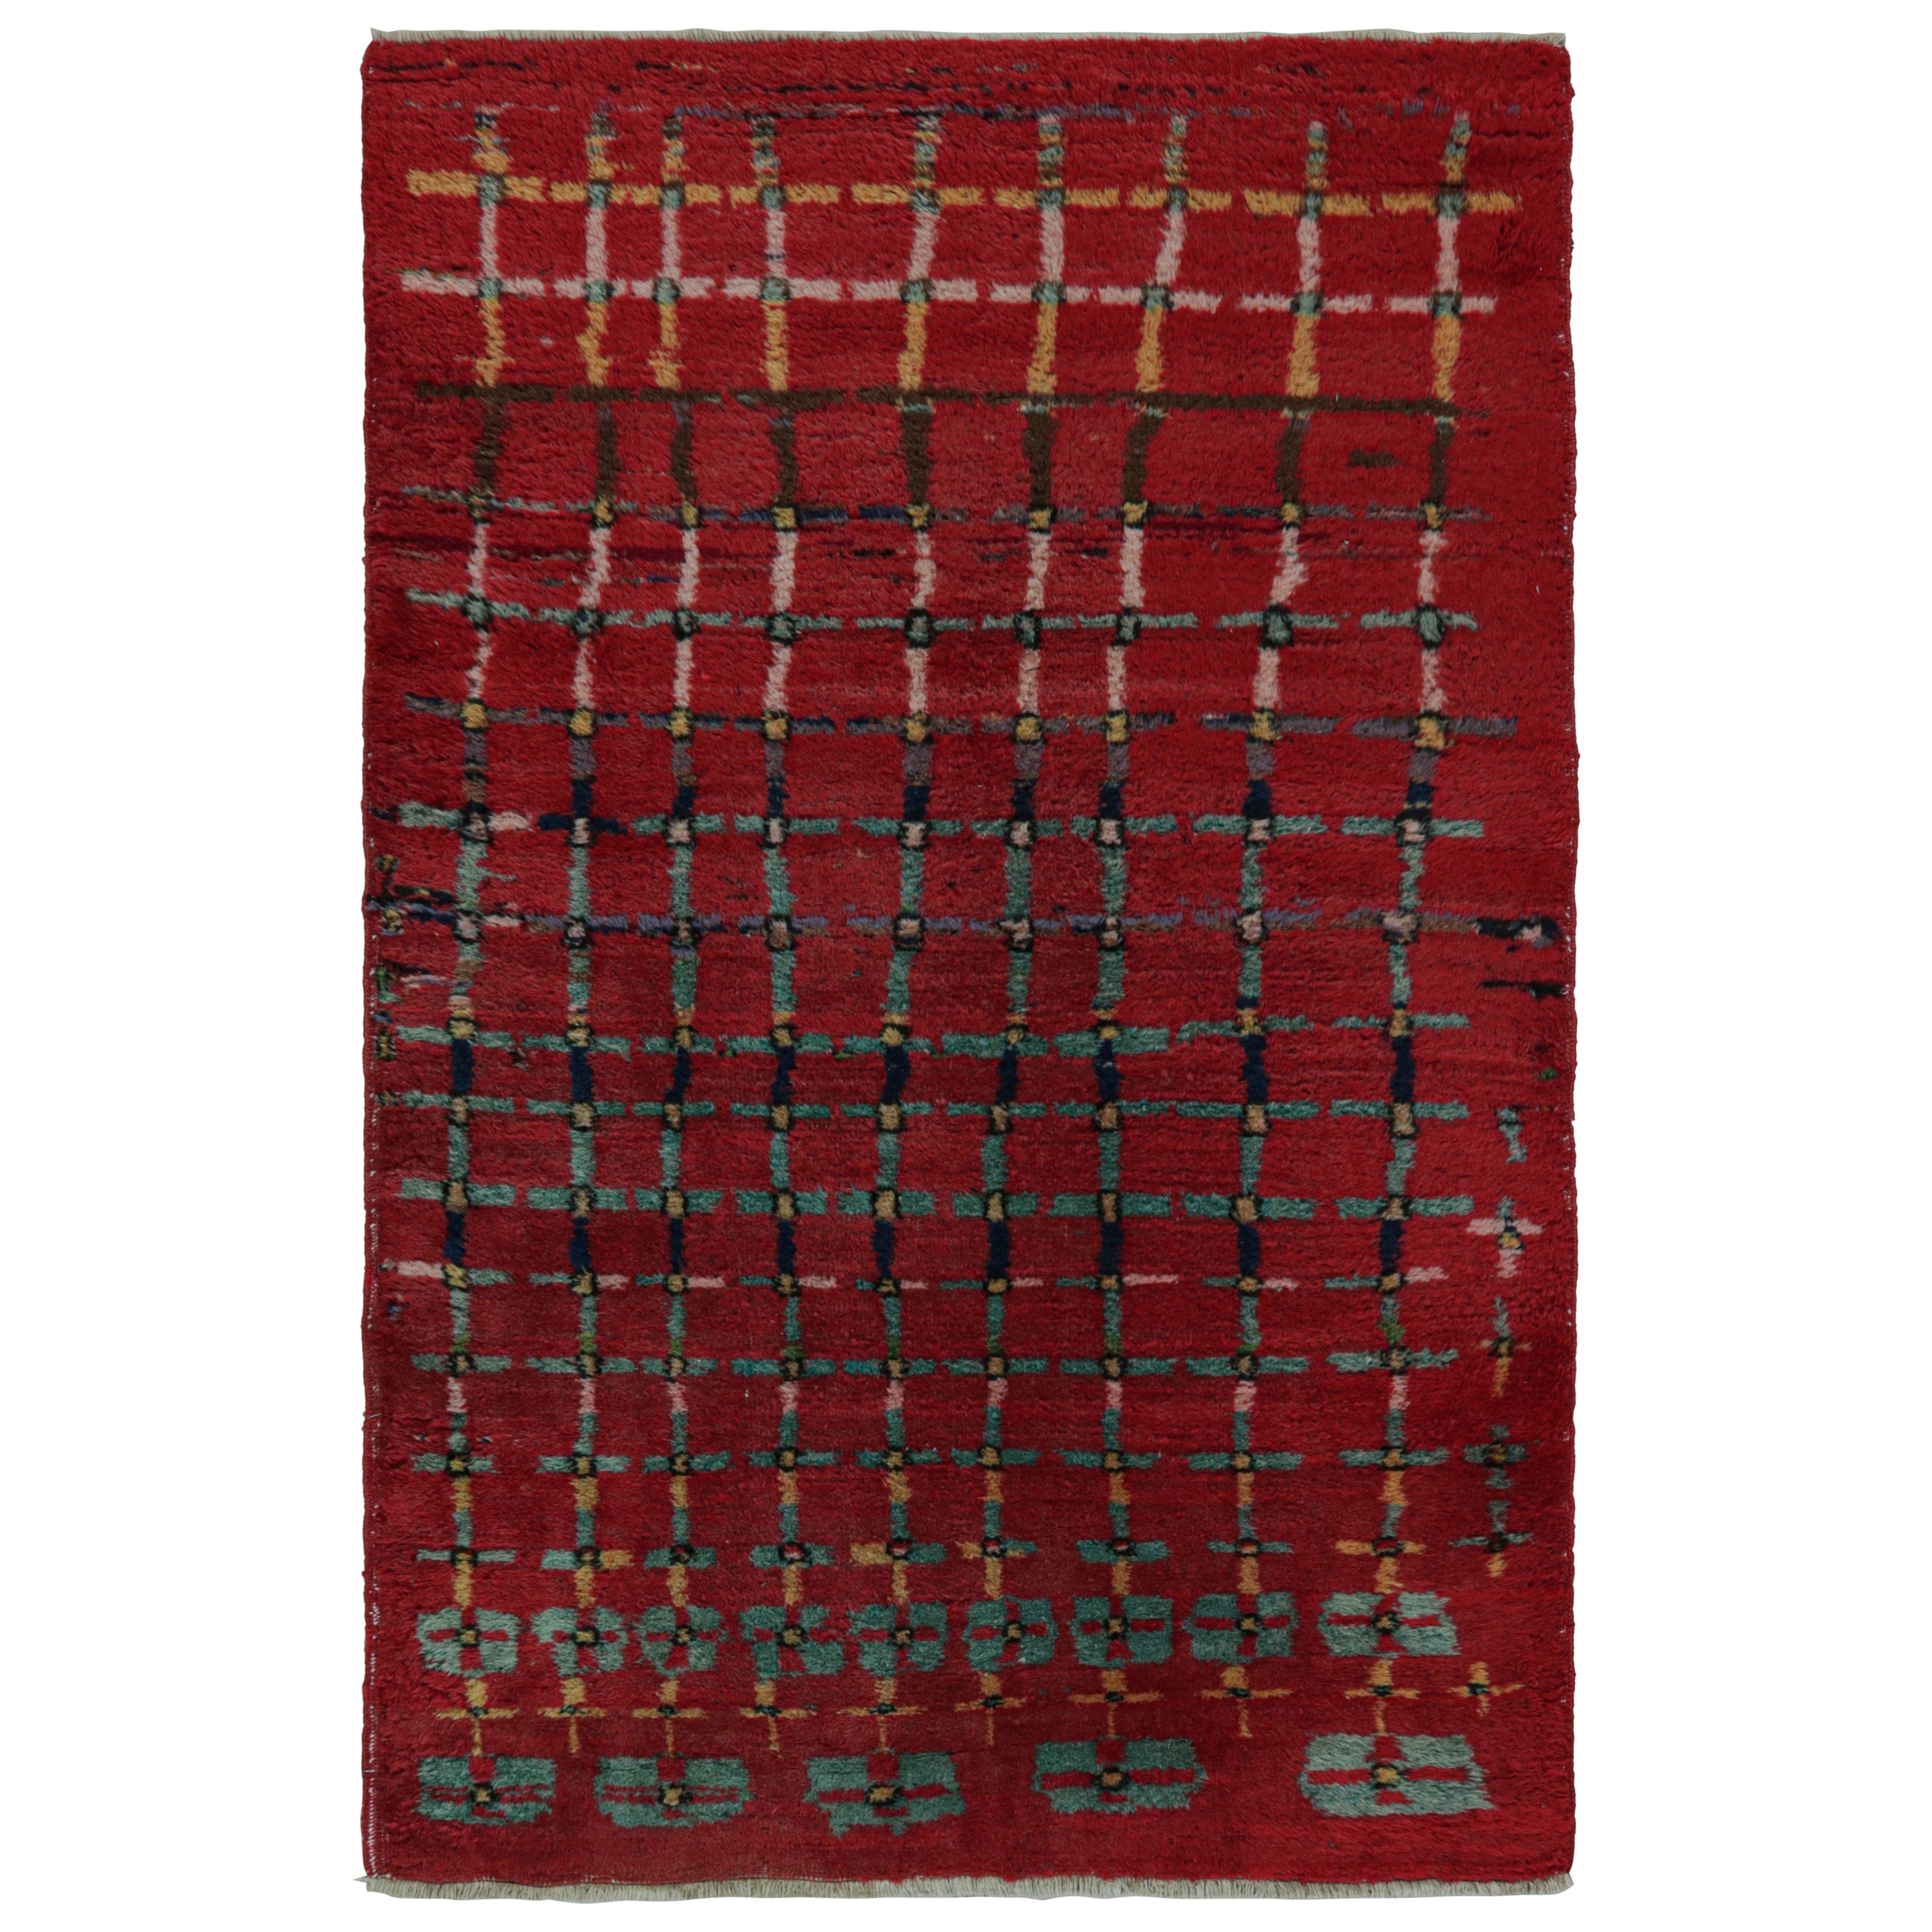 Vintage Zeki Müren Art Deco Rug in Red with Geometric patterns, from Rug & Kilim